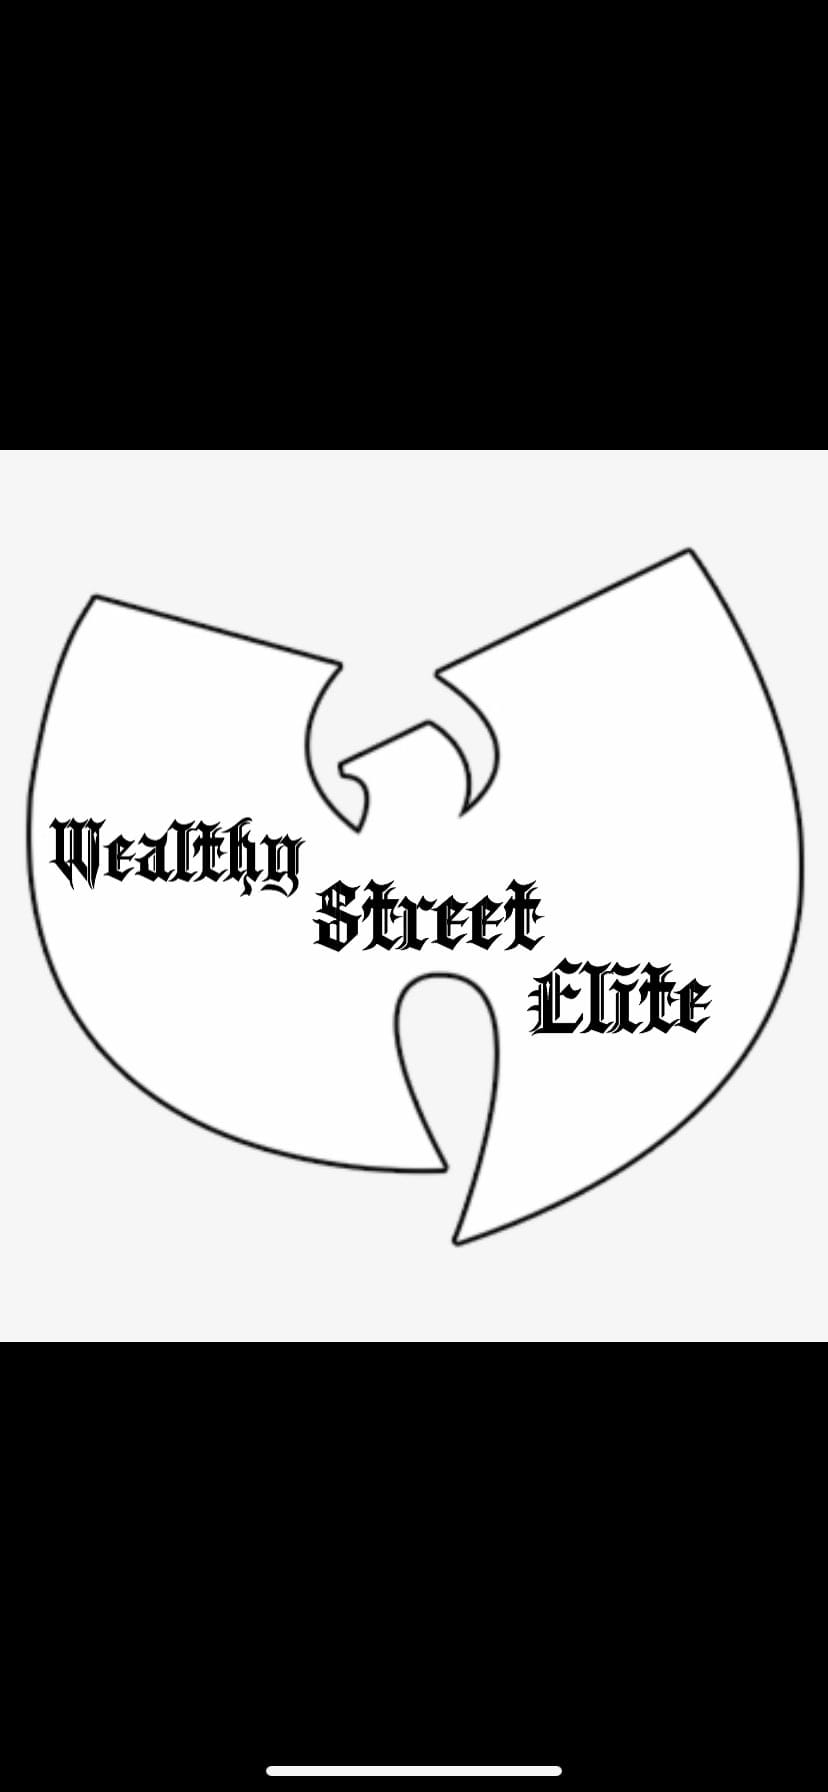 Wealthy Street Elite